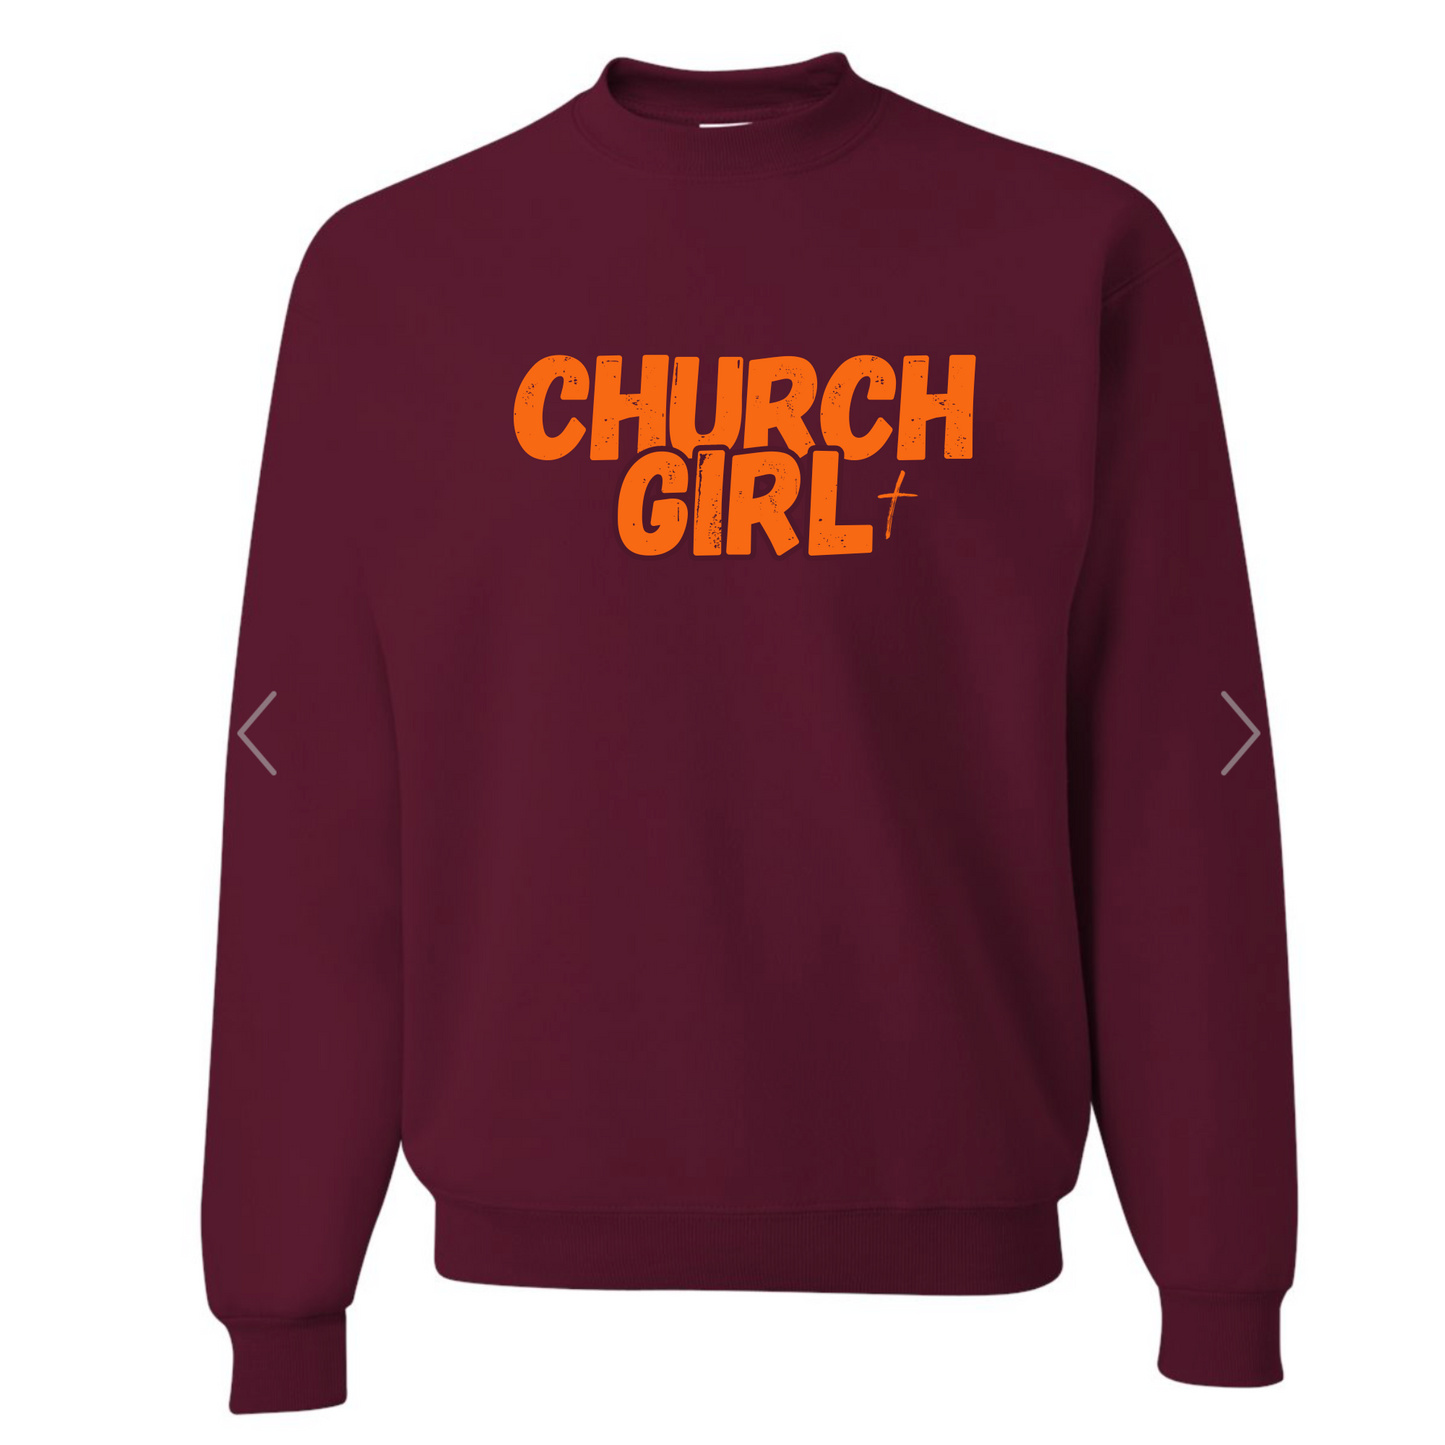 “CHURCH GIRL” UNISEX SWEATSHIRT